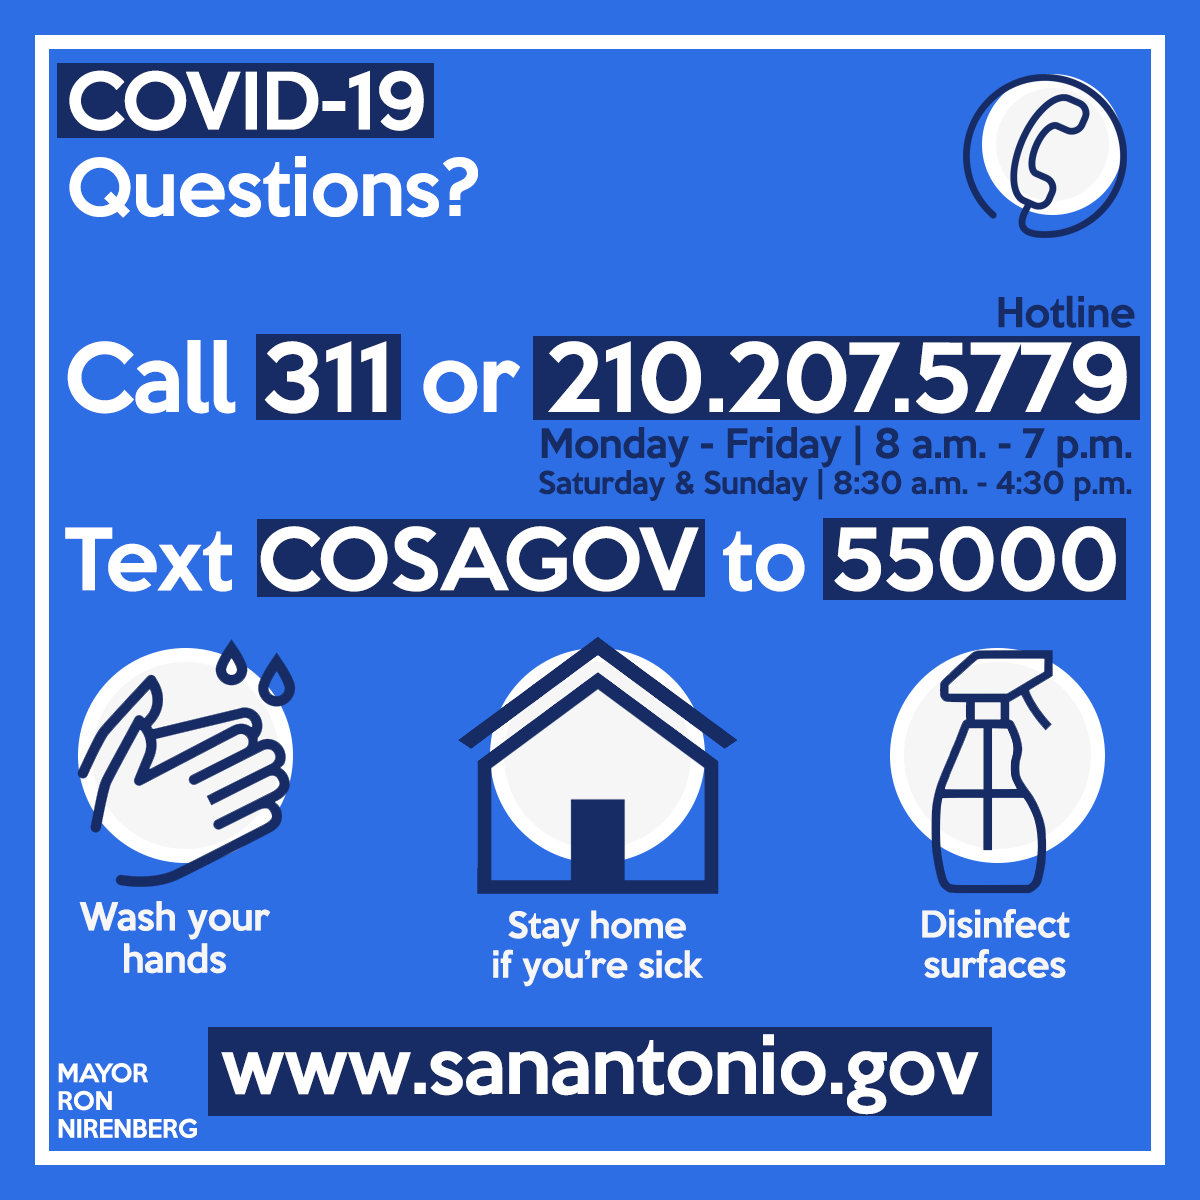 COMMUNICATION PORTALS:San Antonio COVID-19 website: https://sanantonio.gov/Health/News/Alerts/CoronaVirusAmerican Sign Language: http://sat.ahasalerts.com/ActiveAlerts.aspx?id=1334COVID-19 Hotline: 210.207.5779Text COSAGOV to 55000 for text alertsReady South Texas app: https://readysouthtexasapp.com 12/14